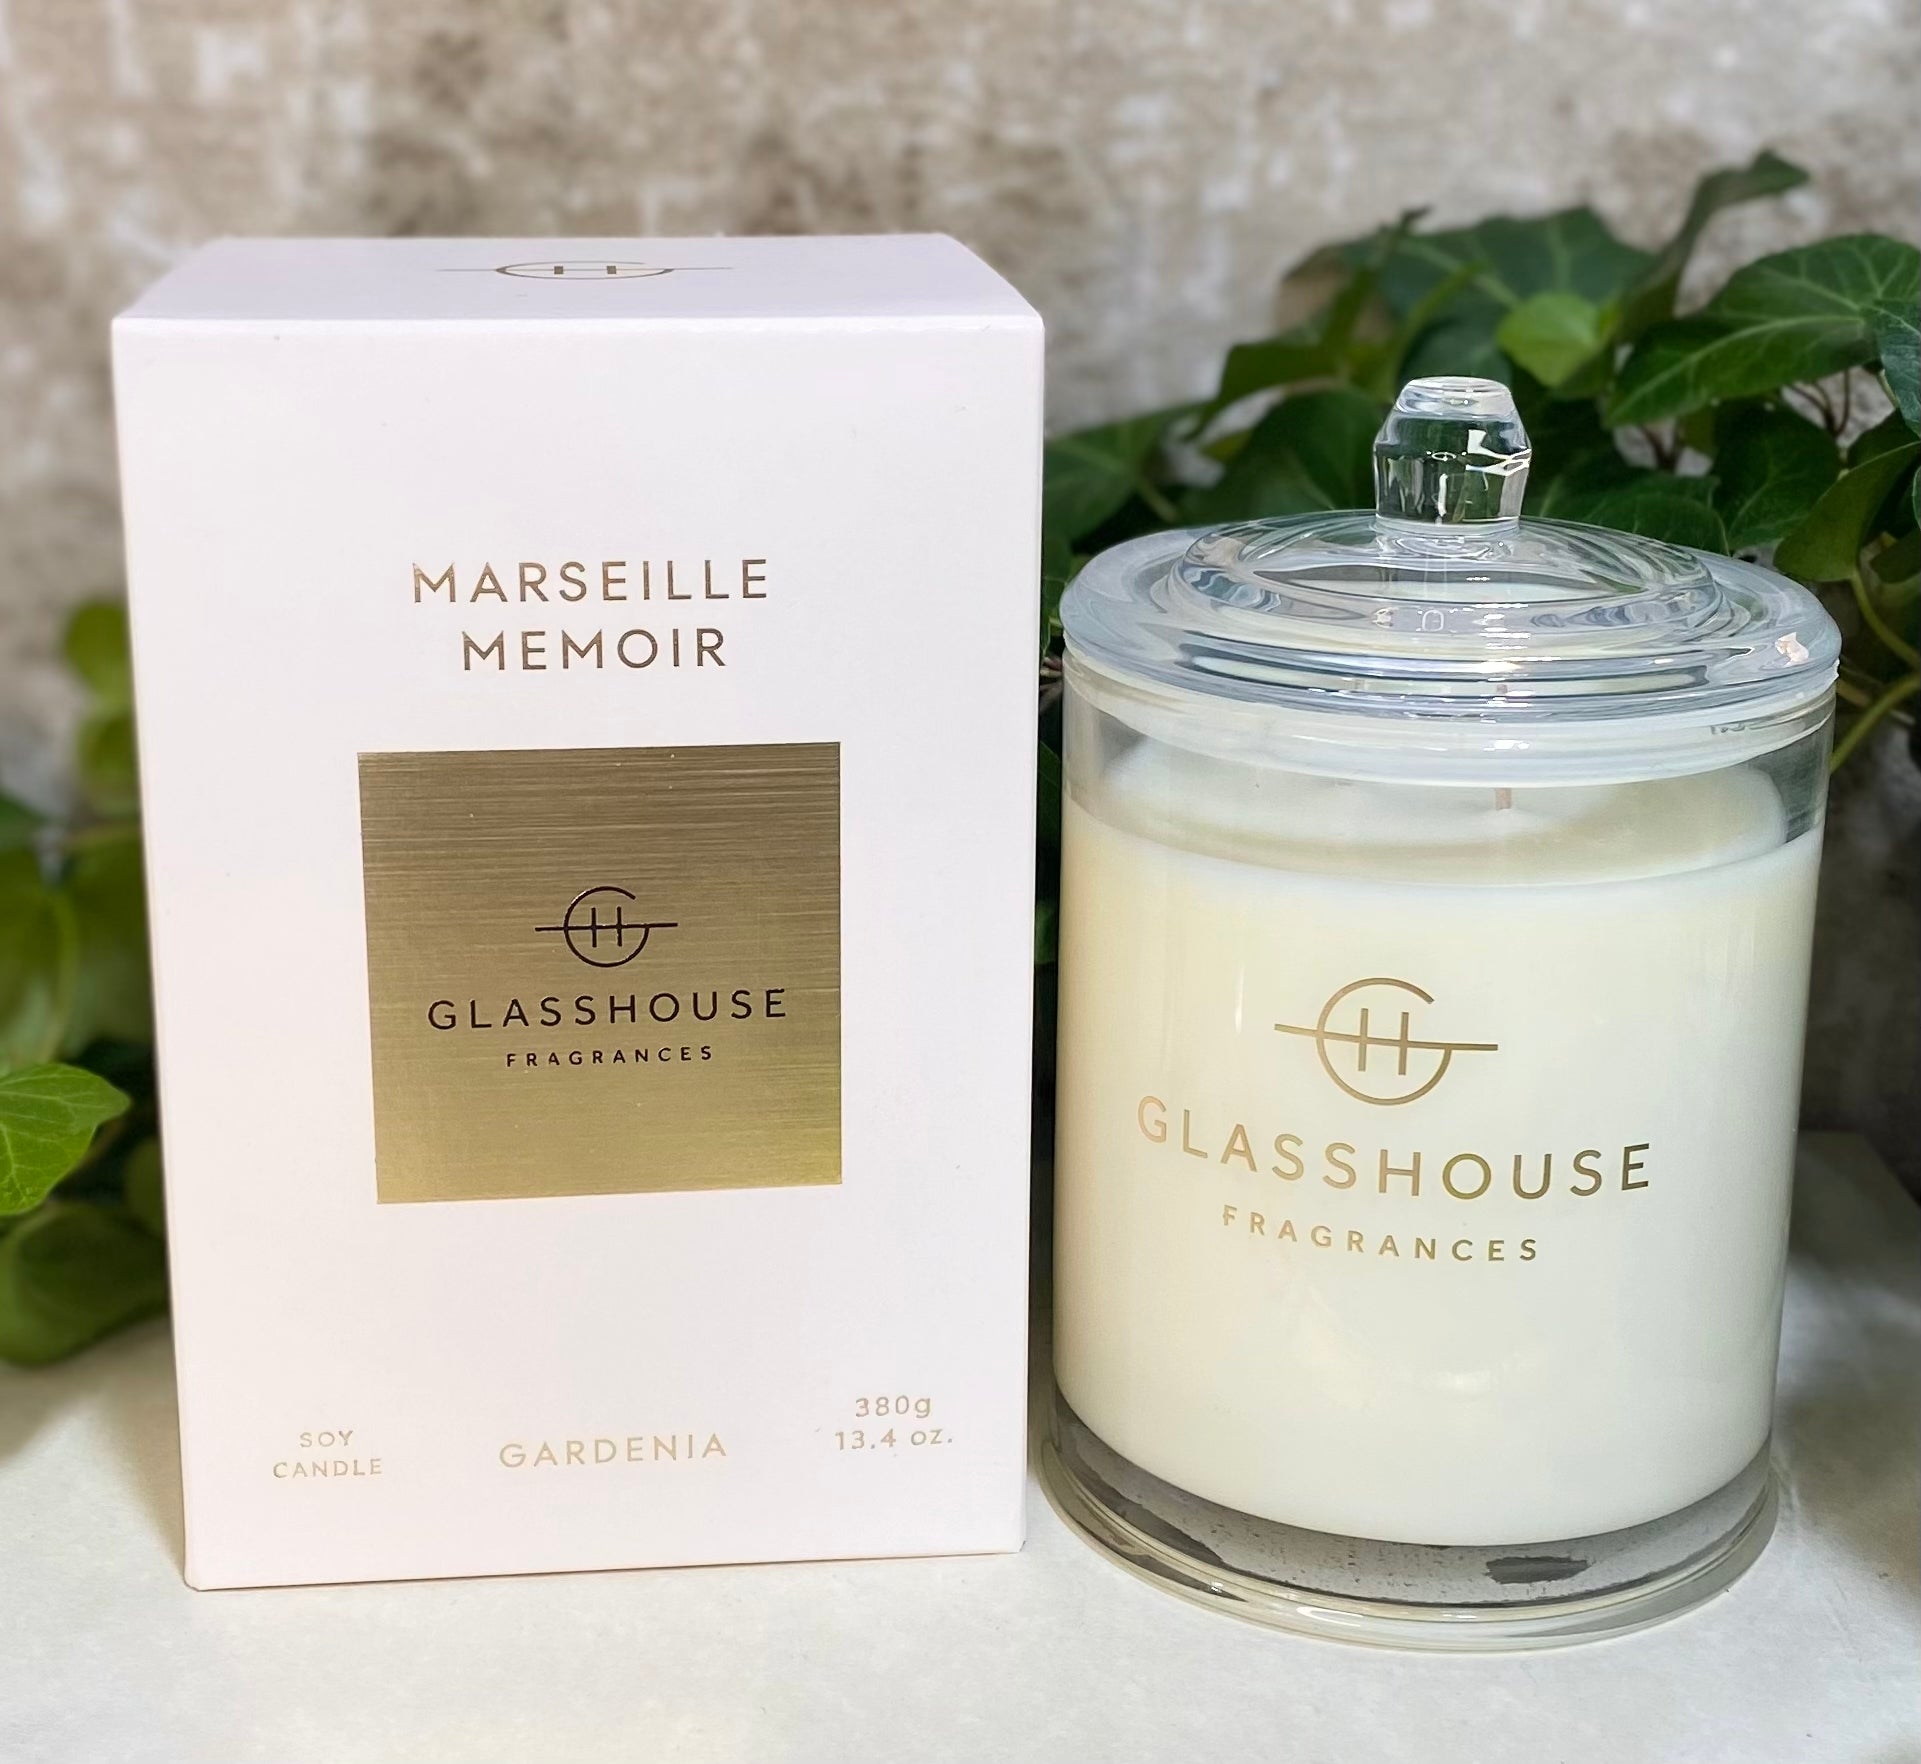 Glasshouse “Marseille Memoir” candle 13.4 oz